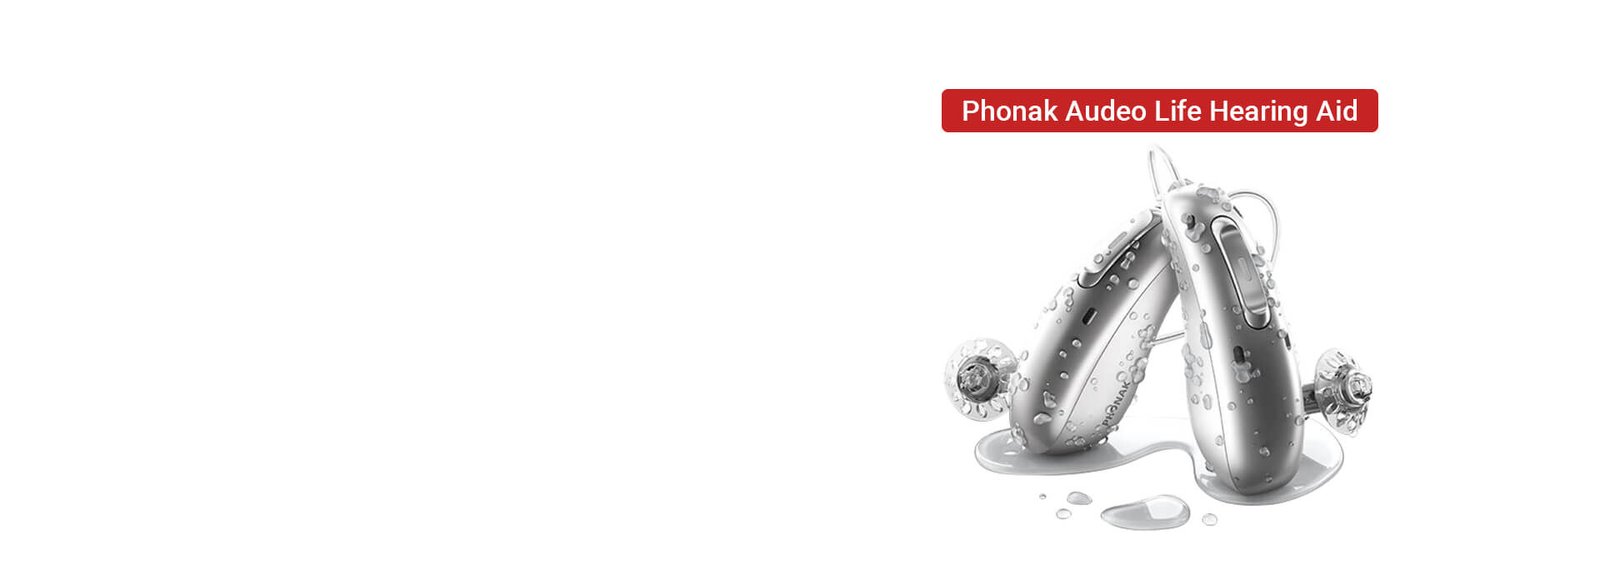 Phonak Audeo Life Hearing Aid